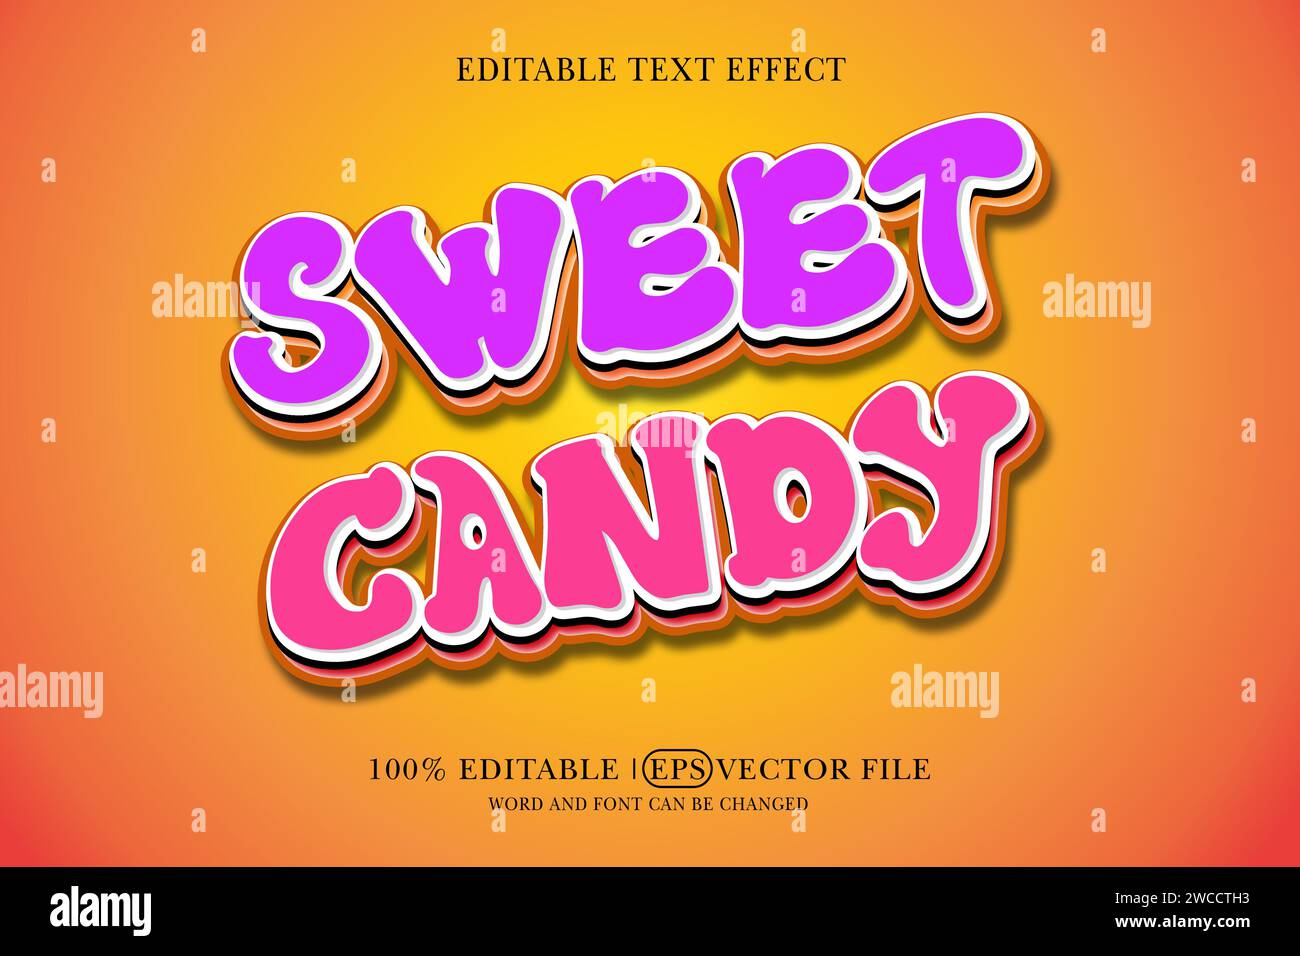 sweet candy 3d editable text effect cartoon style vector Stock Vector